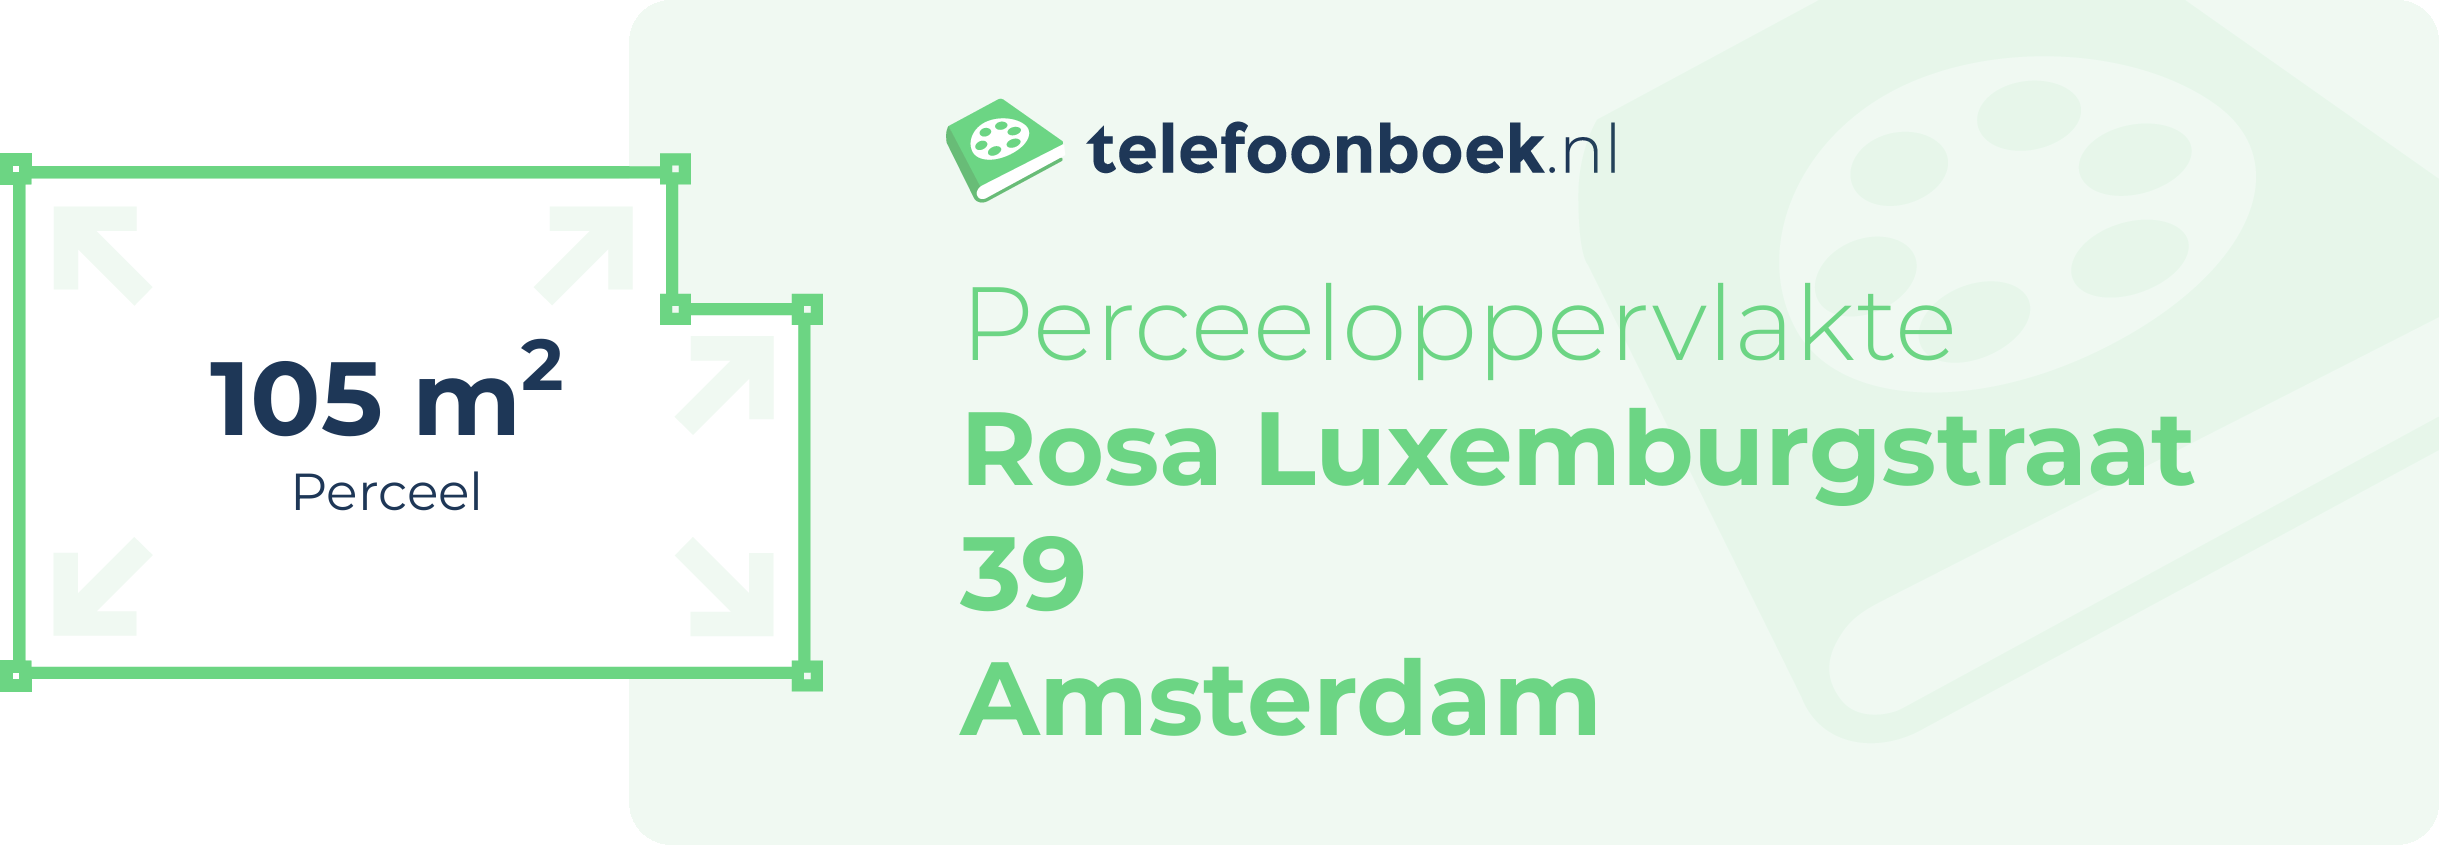 Perceeloppervlakte Rosa Luxemburgstraat 39 Amsterdam